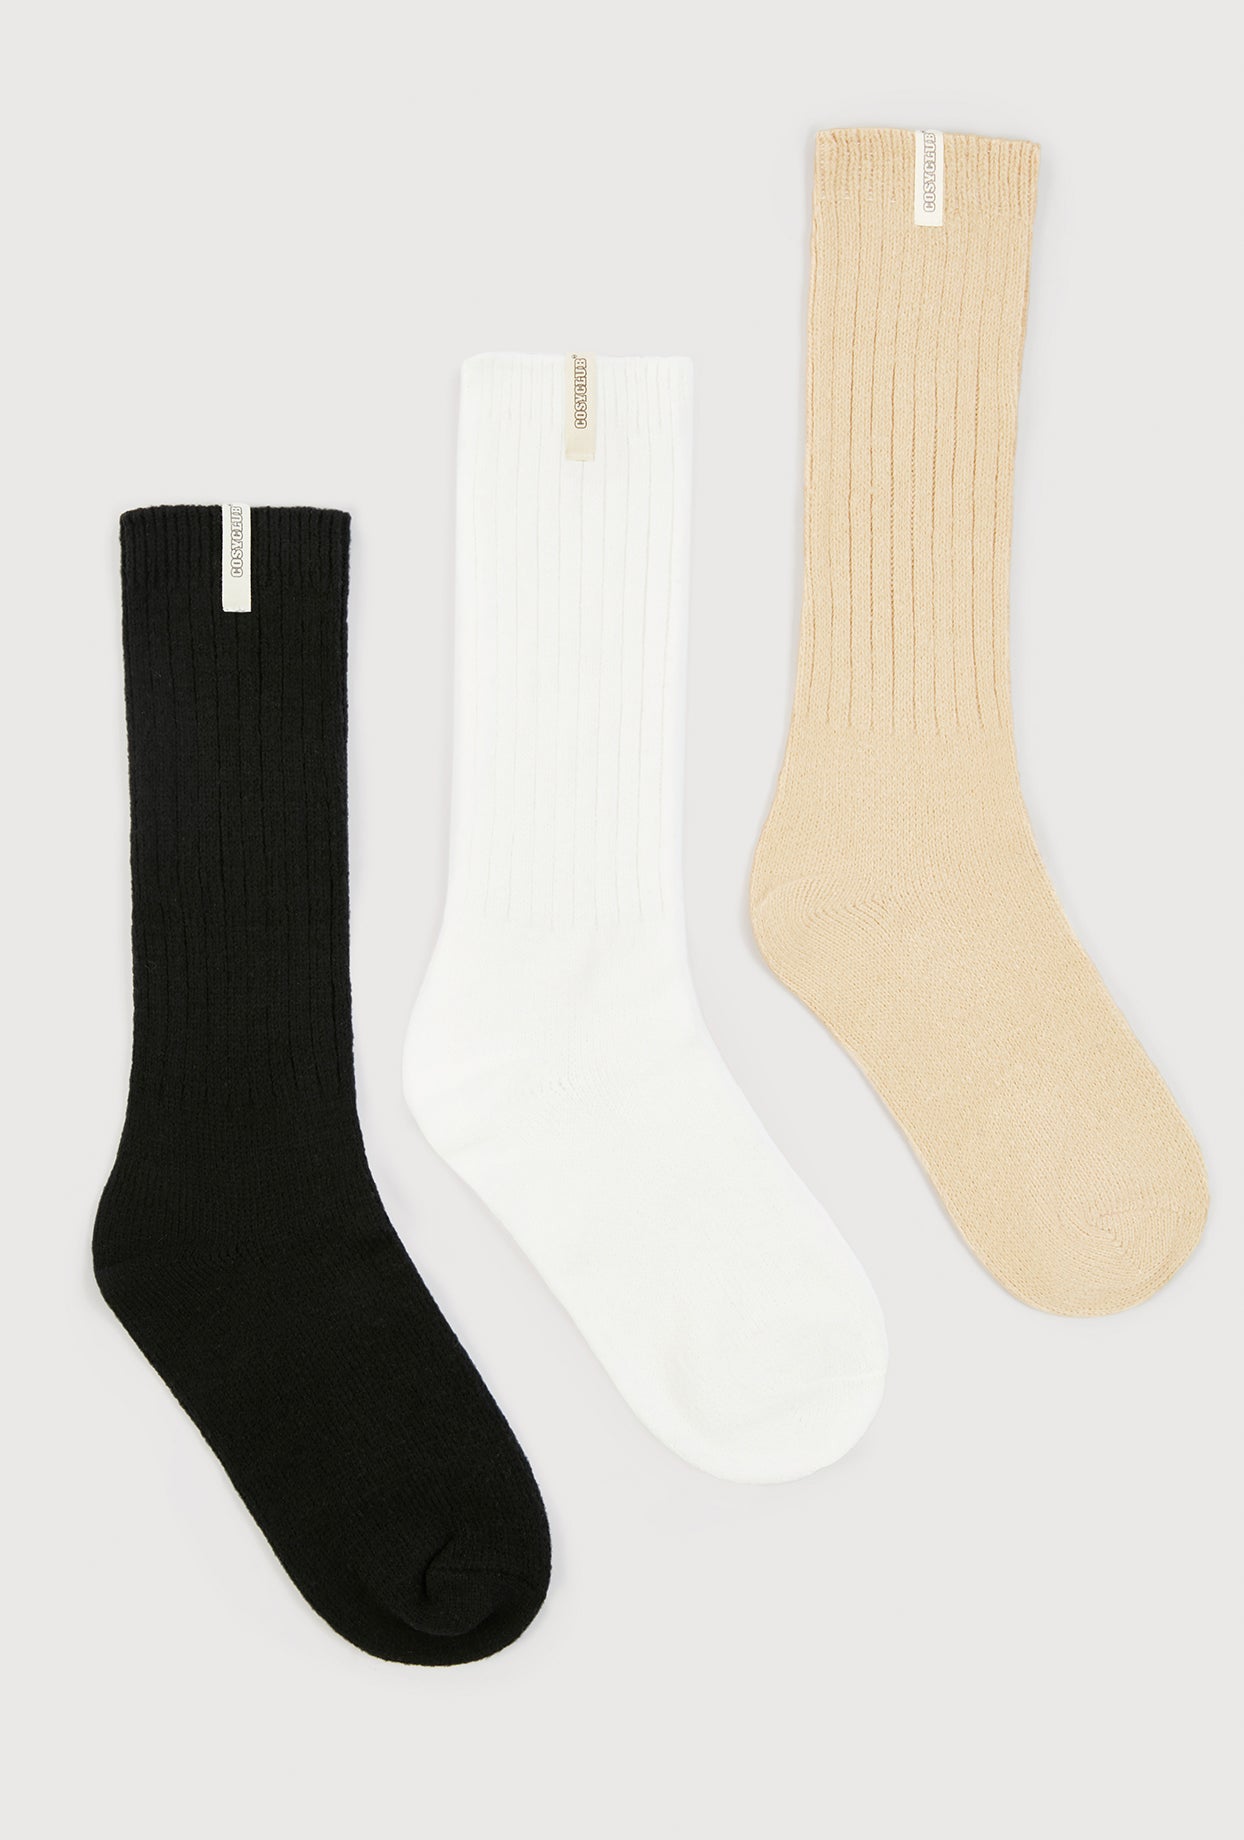 Bo+Tee Gym Accessories, Socks & Caps